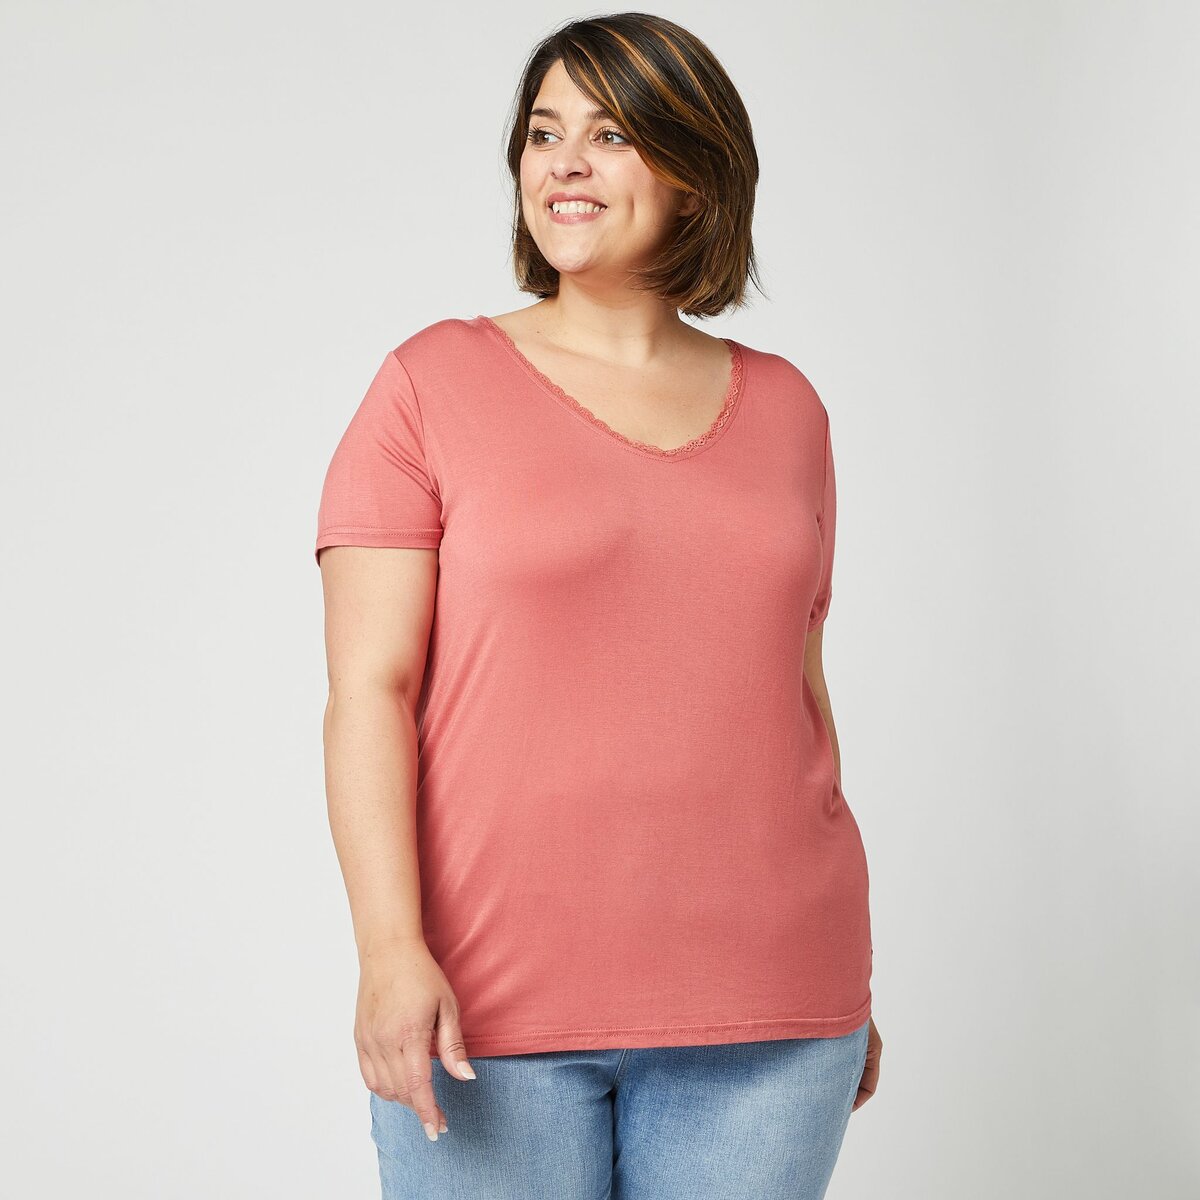 IN EXTENSO T-shirt manches courtes rose col v en dentelle grande taille femme